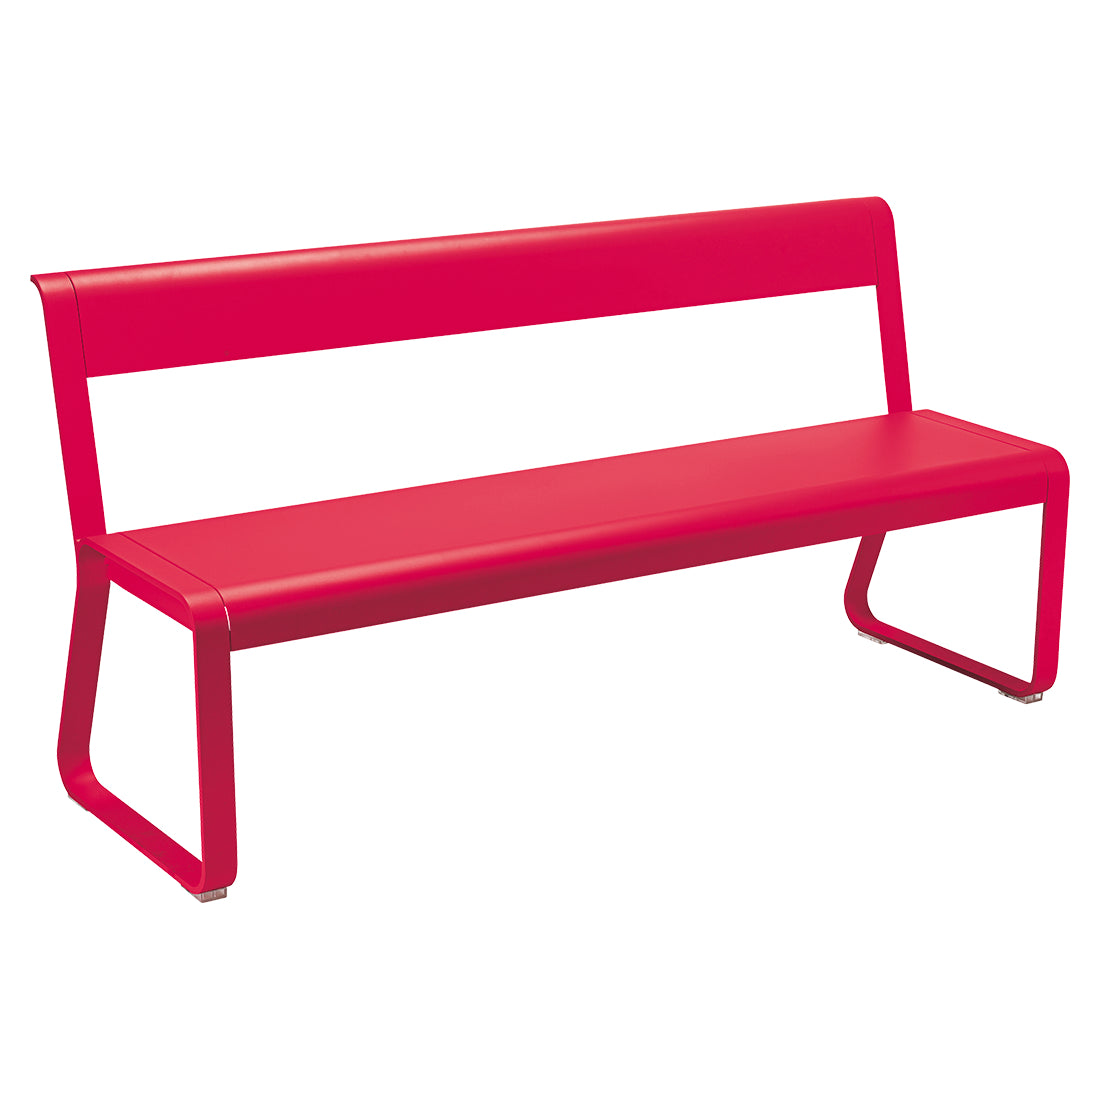 Fermob Bellevie bench with backrest - bonmarche